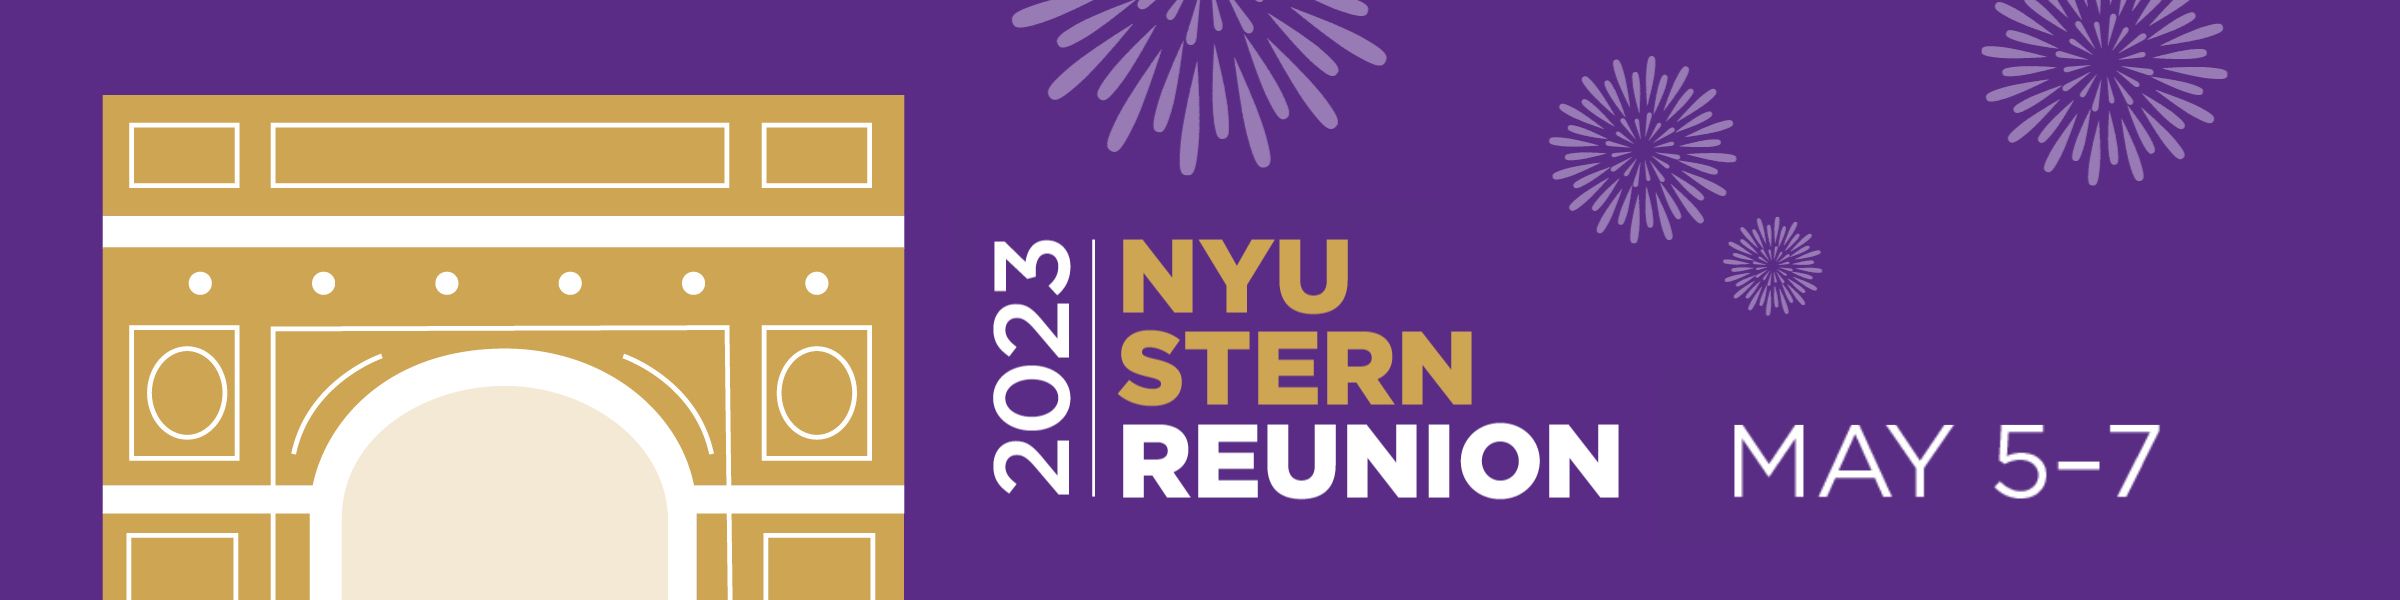 NYU Stern Class Book - MBA Class of 2018